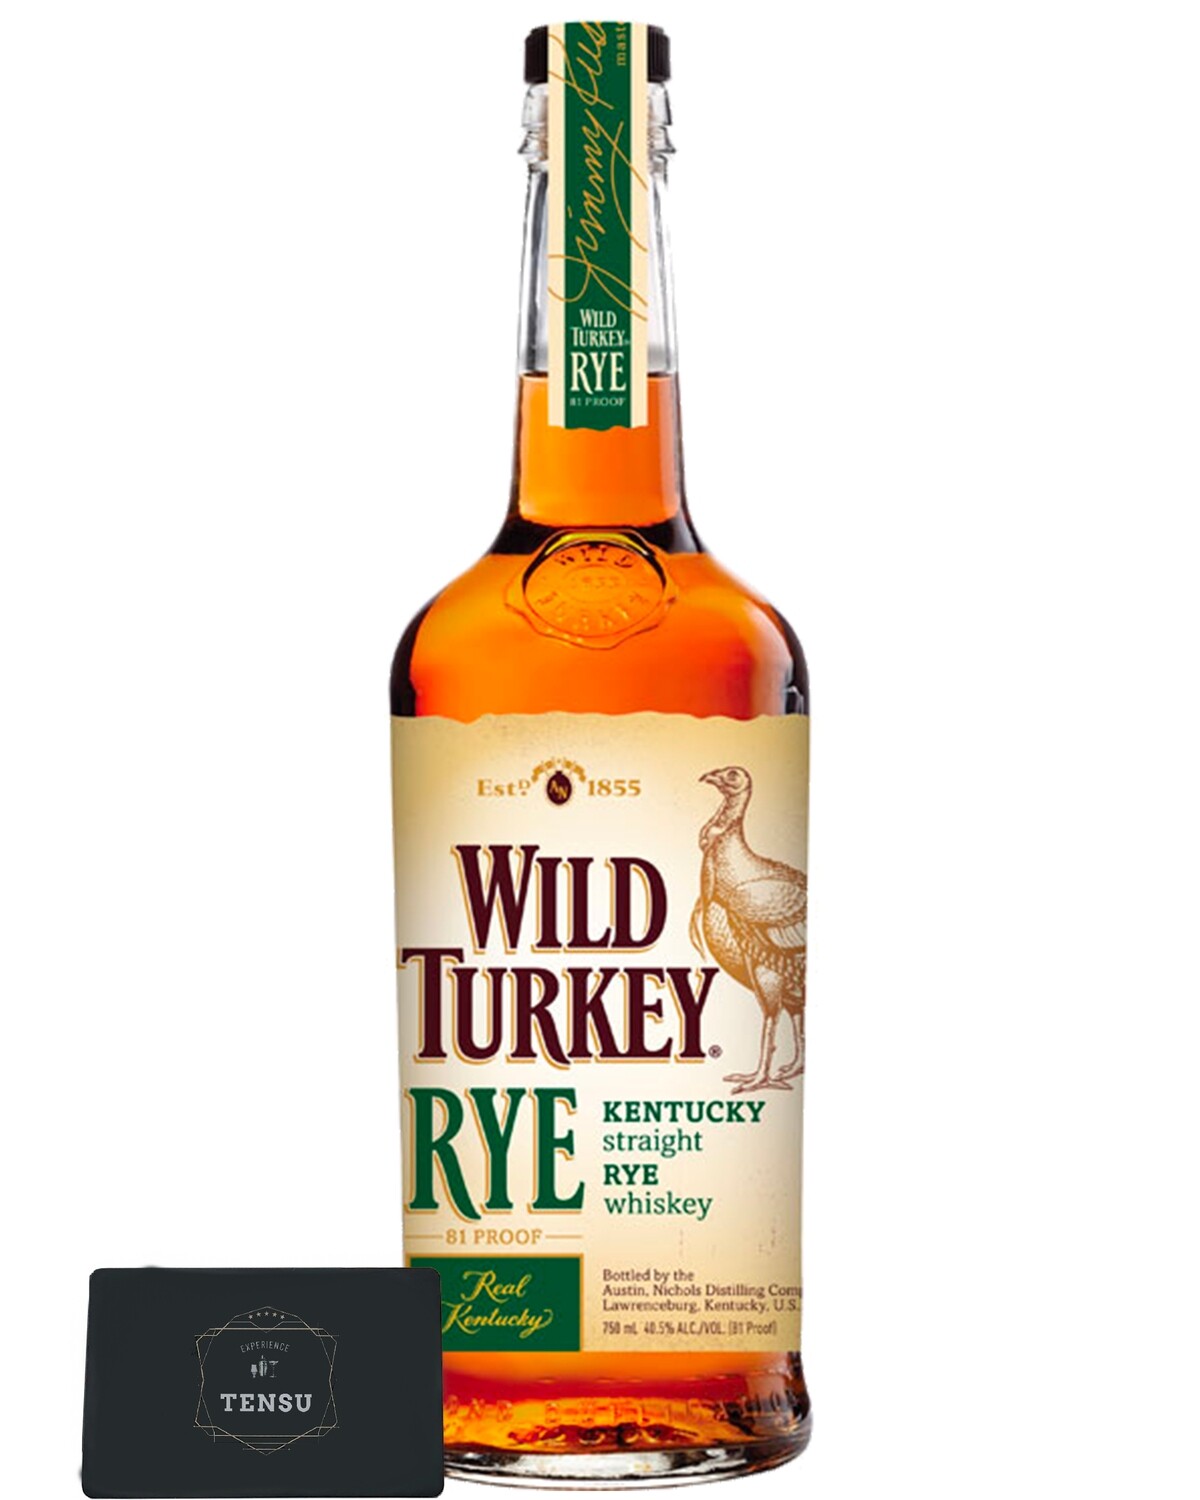 Wild Turkey - Straight Rye (81 Proof)